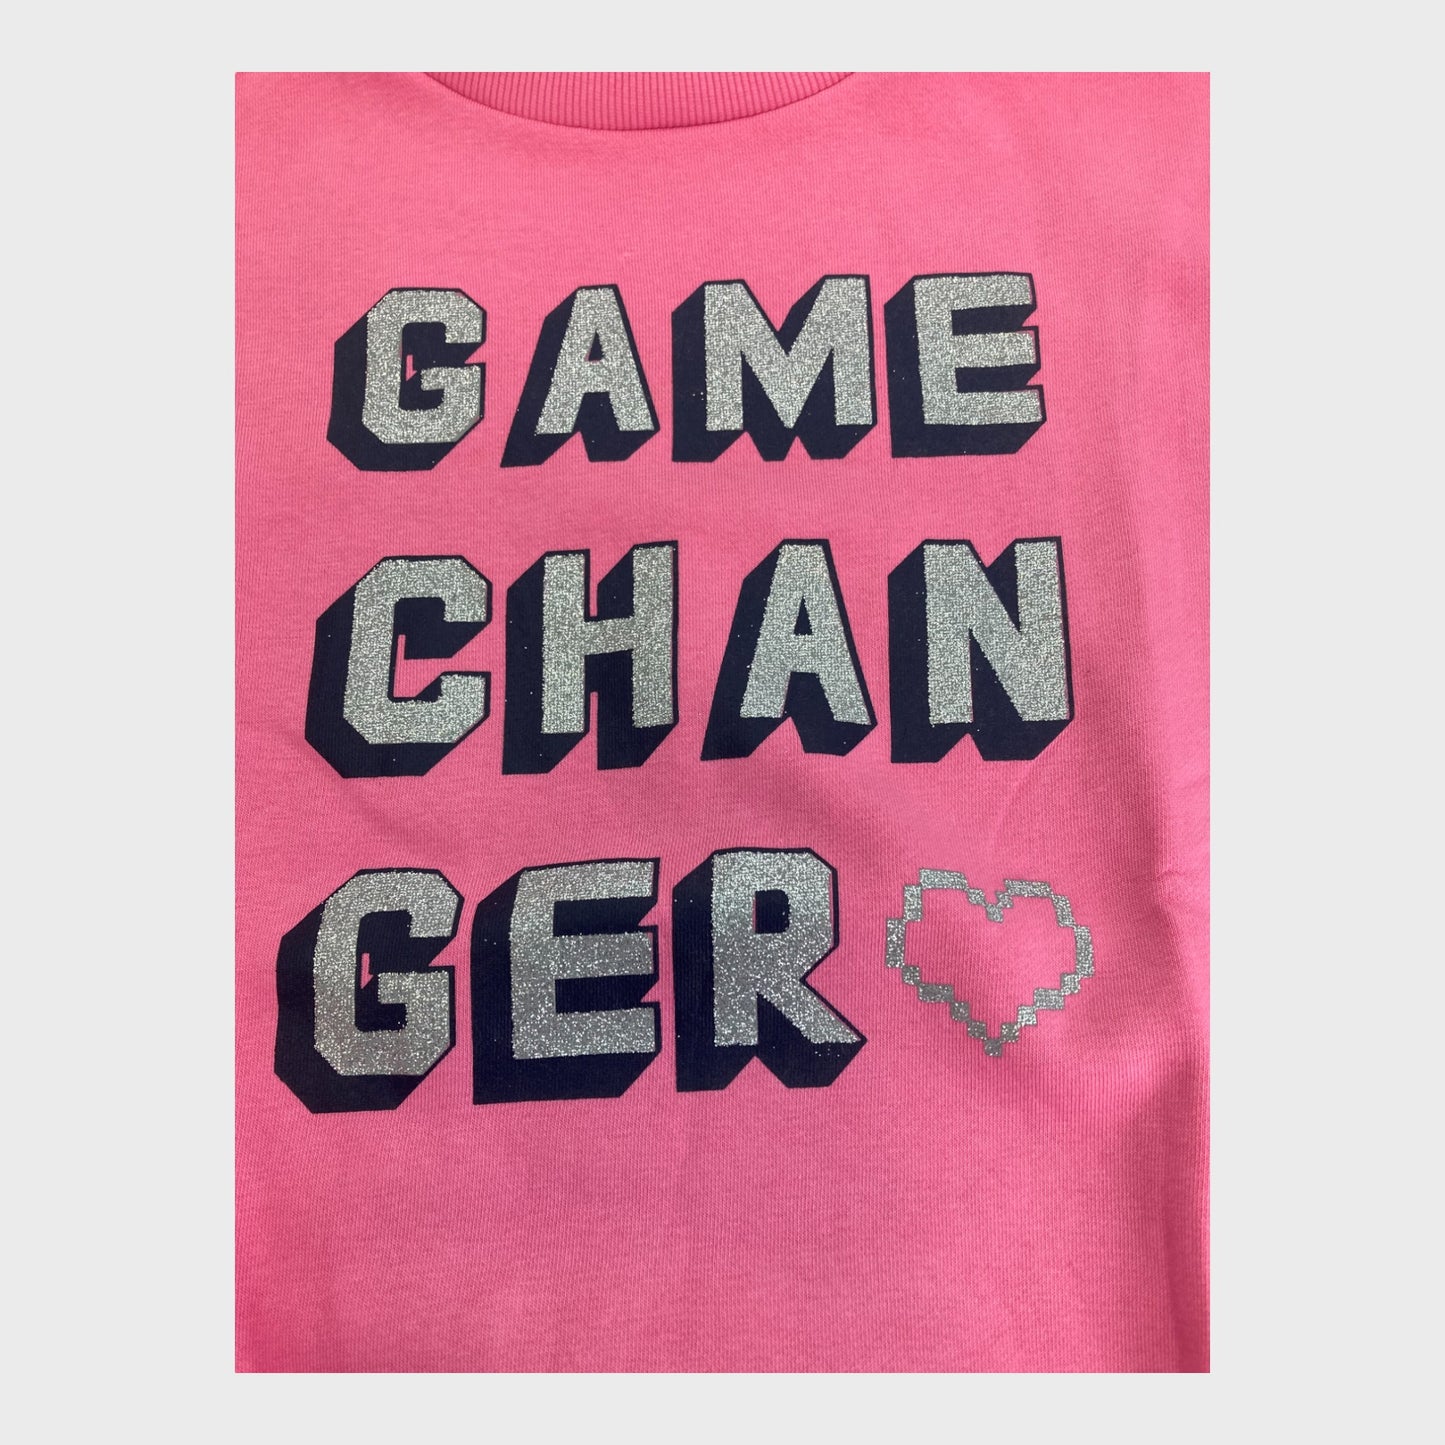 Girls Pink Game Changer Jumper